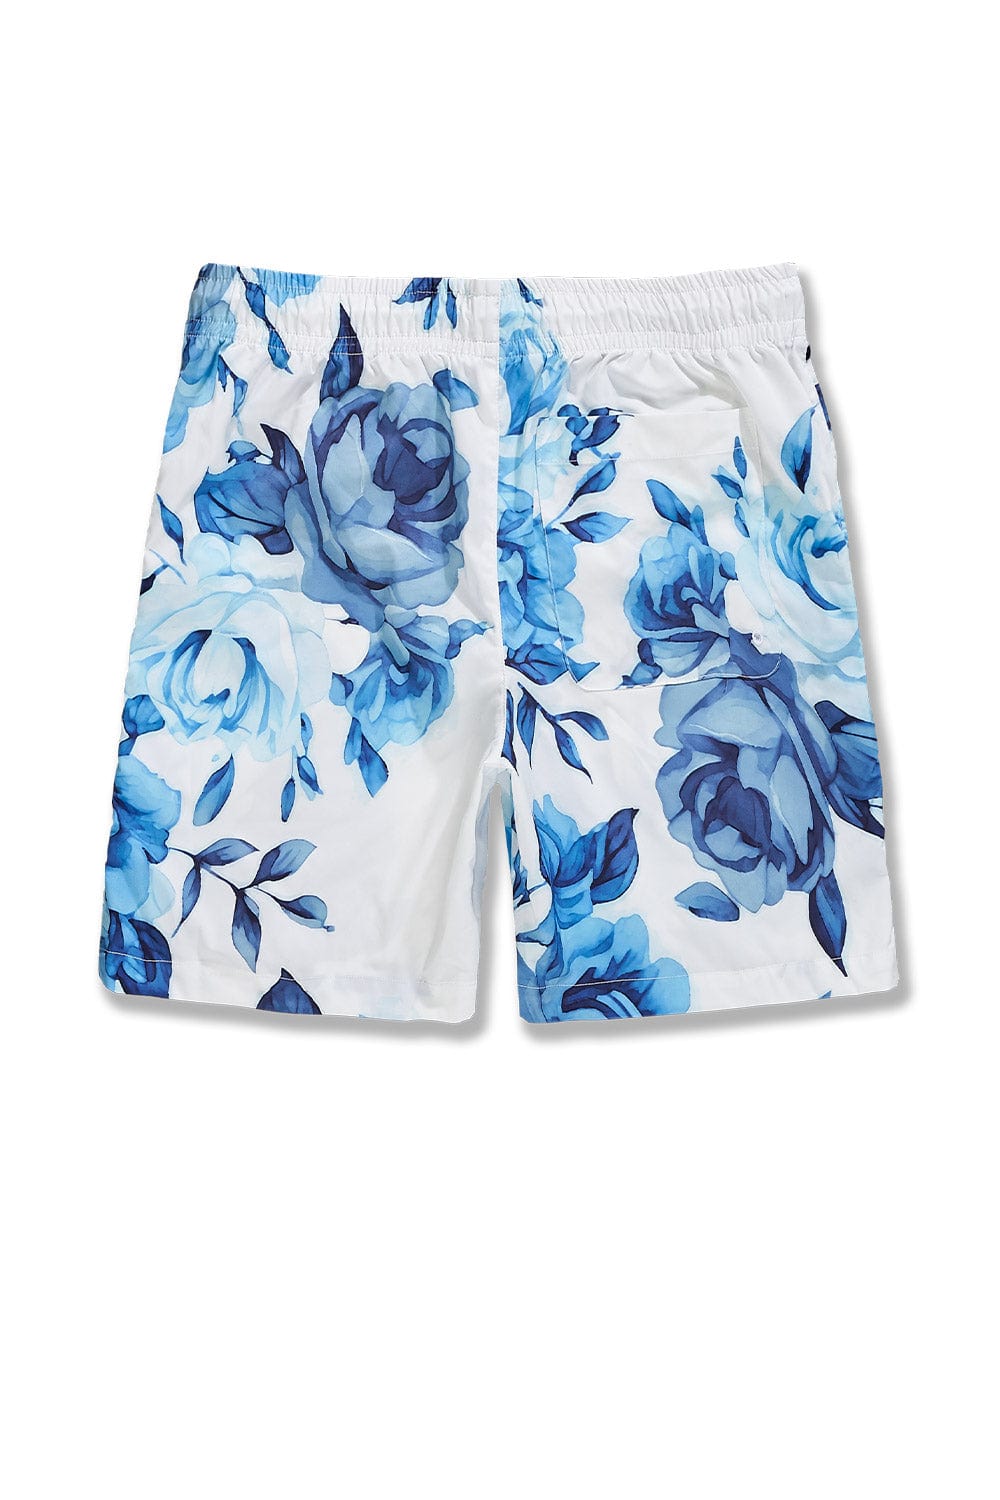 Jordan Craig Retro - Ibiza Lounge Shorts (Blue Floral)